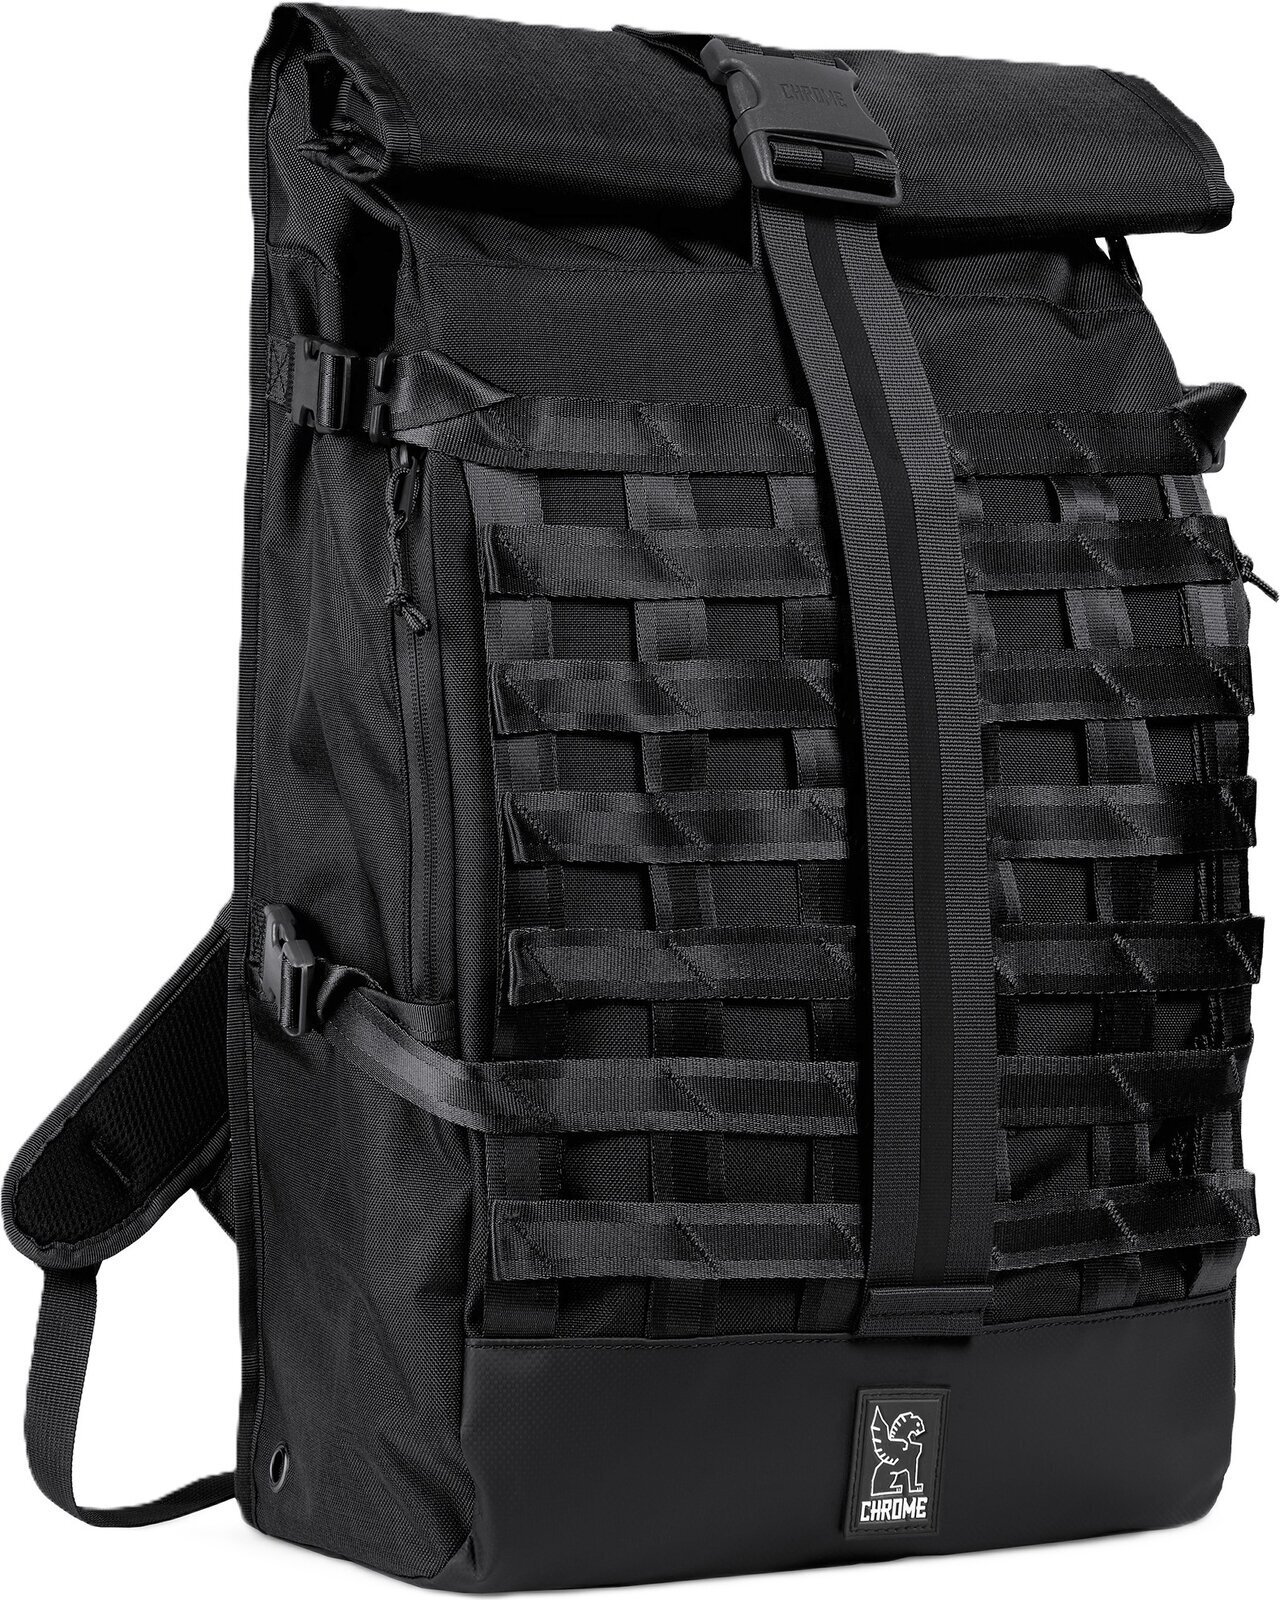 Lifestyle batoh / Taška Chrome Barrage Backpack Black 34 L Batoh